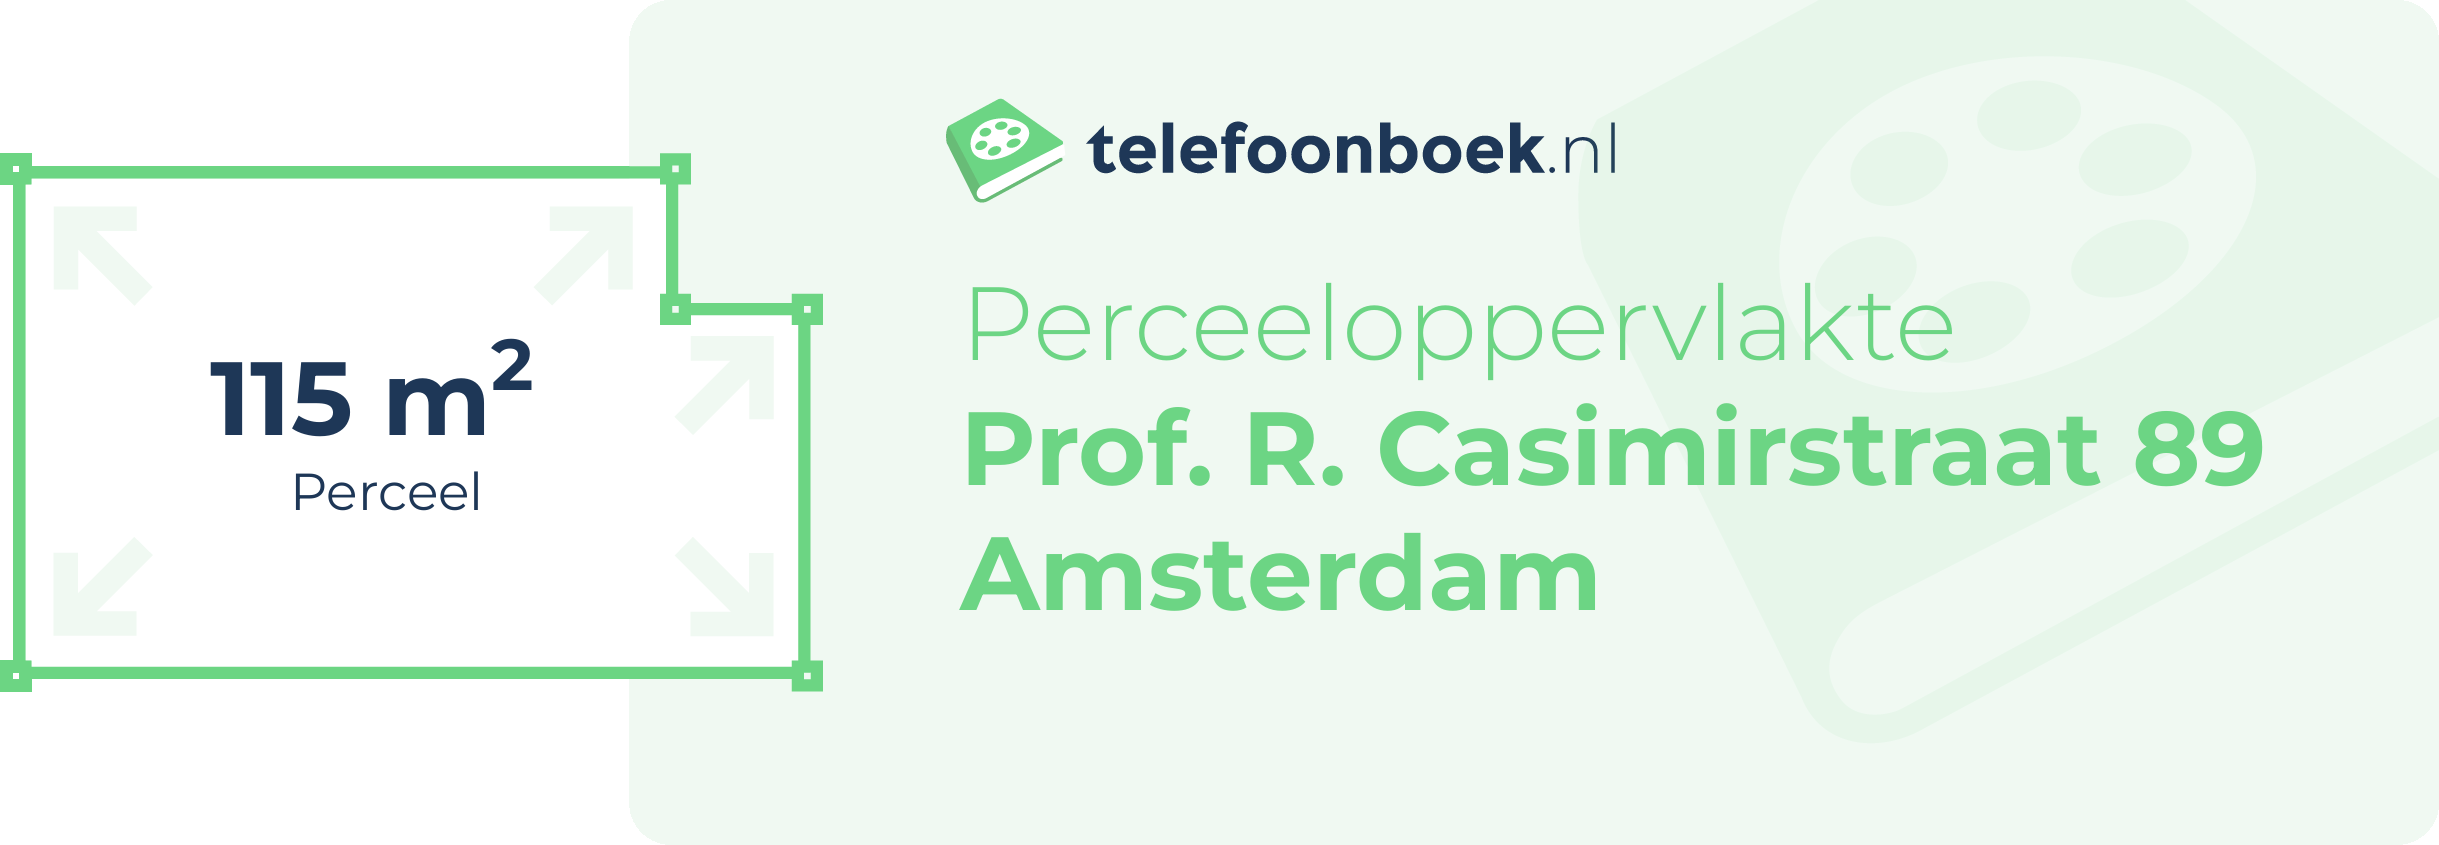 Perceeloppervlakte Prof. R. Casimirstraat 89 Amsterdam